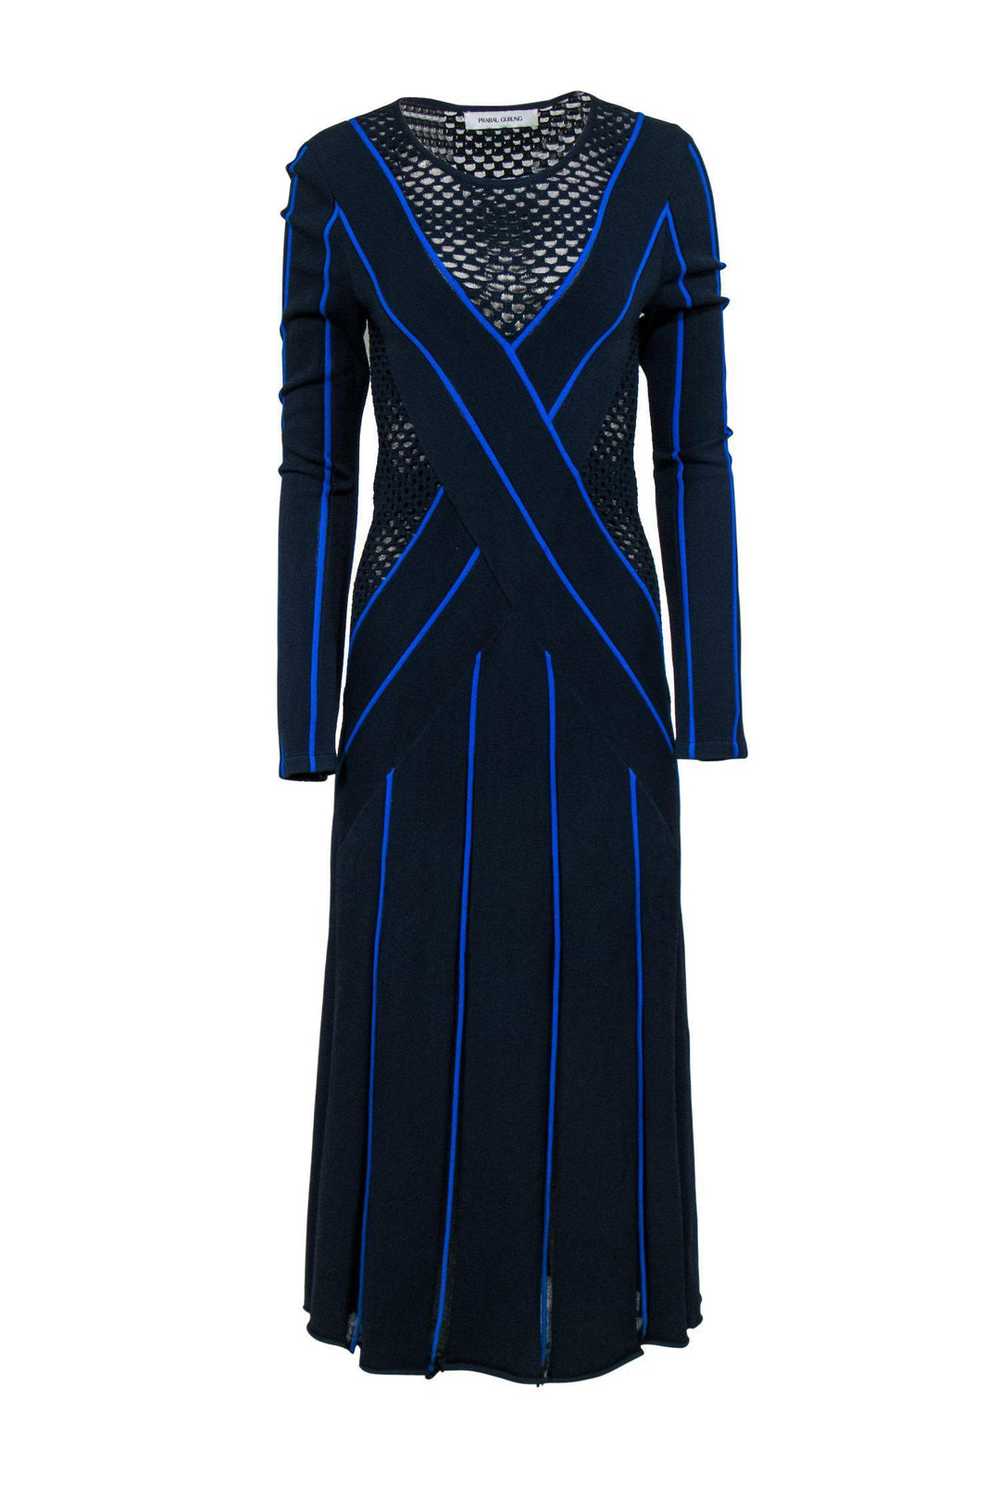 Prabal Gurung - Blue Knit Maxi Dress w/ Netted Ac… - image 1